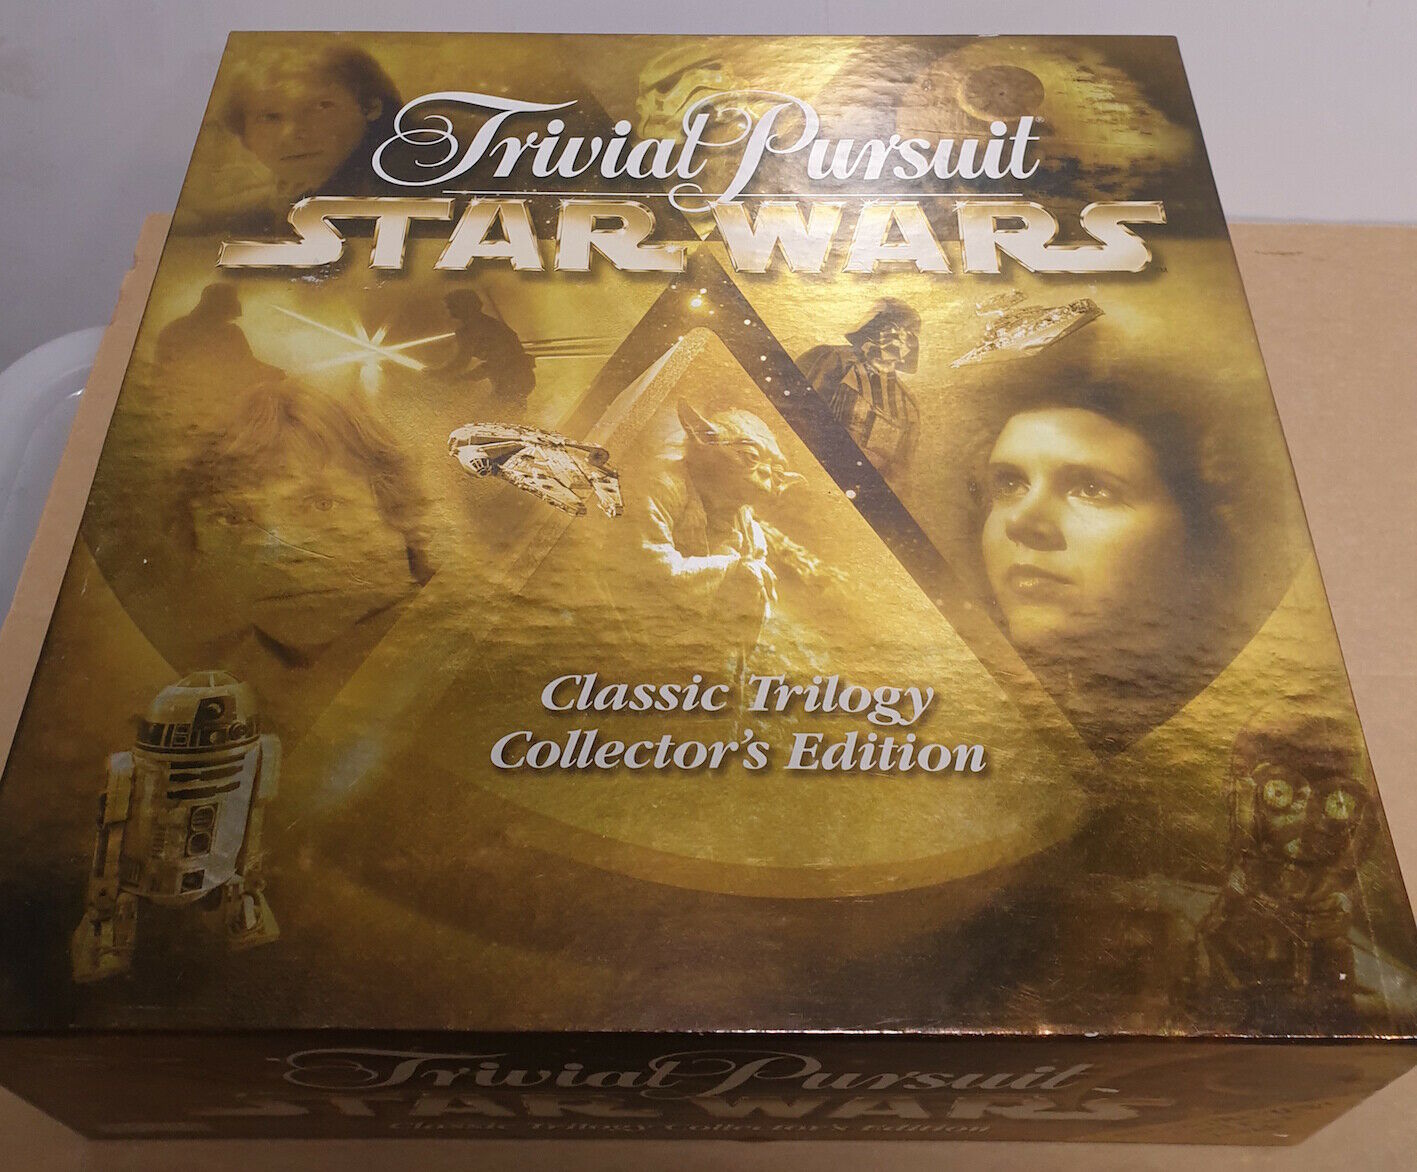 Trivial Pursuit Star Wars Classic Trilogy Collectors Edition for sale online